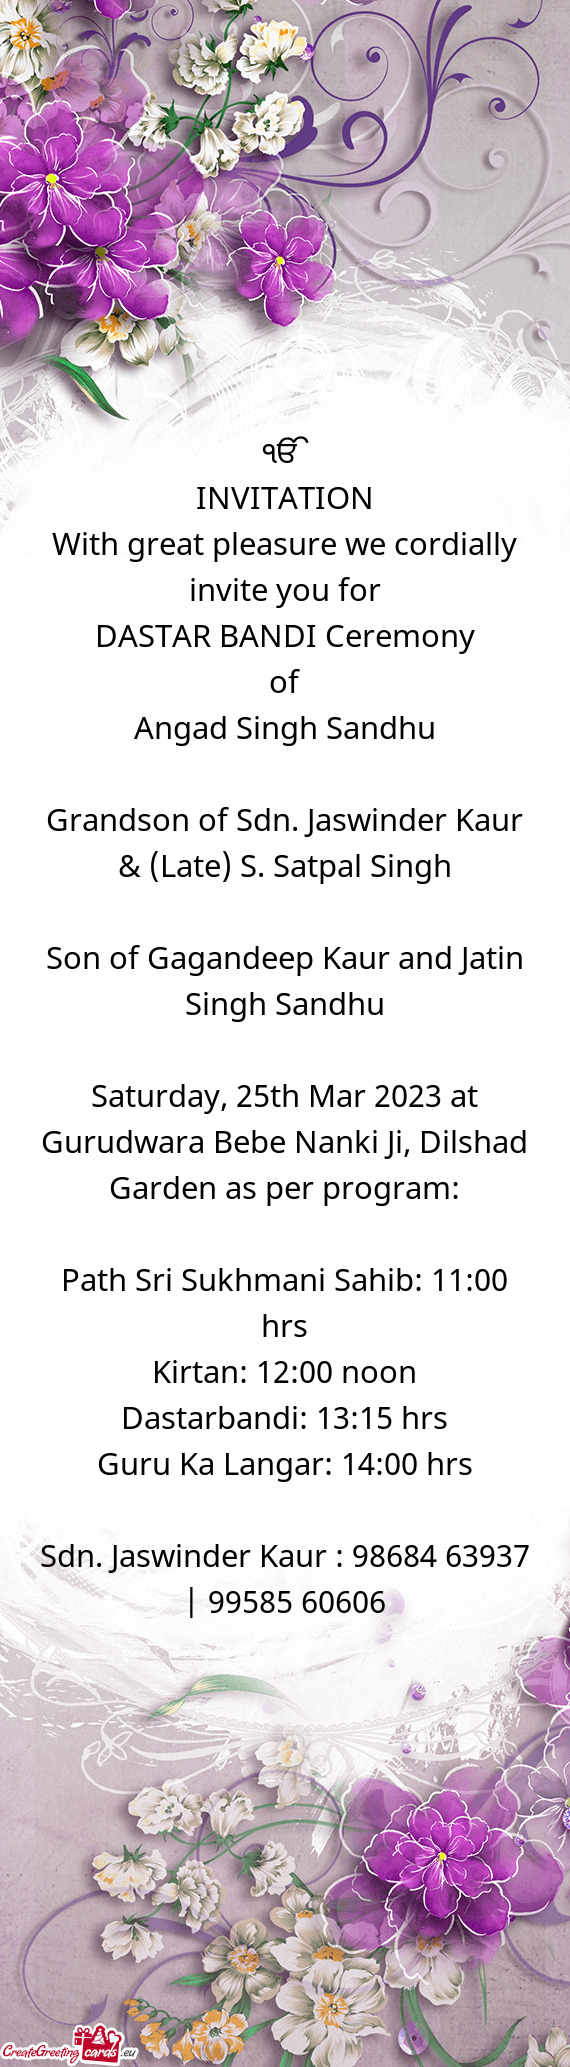 Grandson of Sdn. Jaswinder Kaur & (Late) S. Satpal Singh